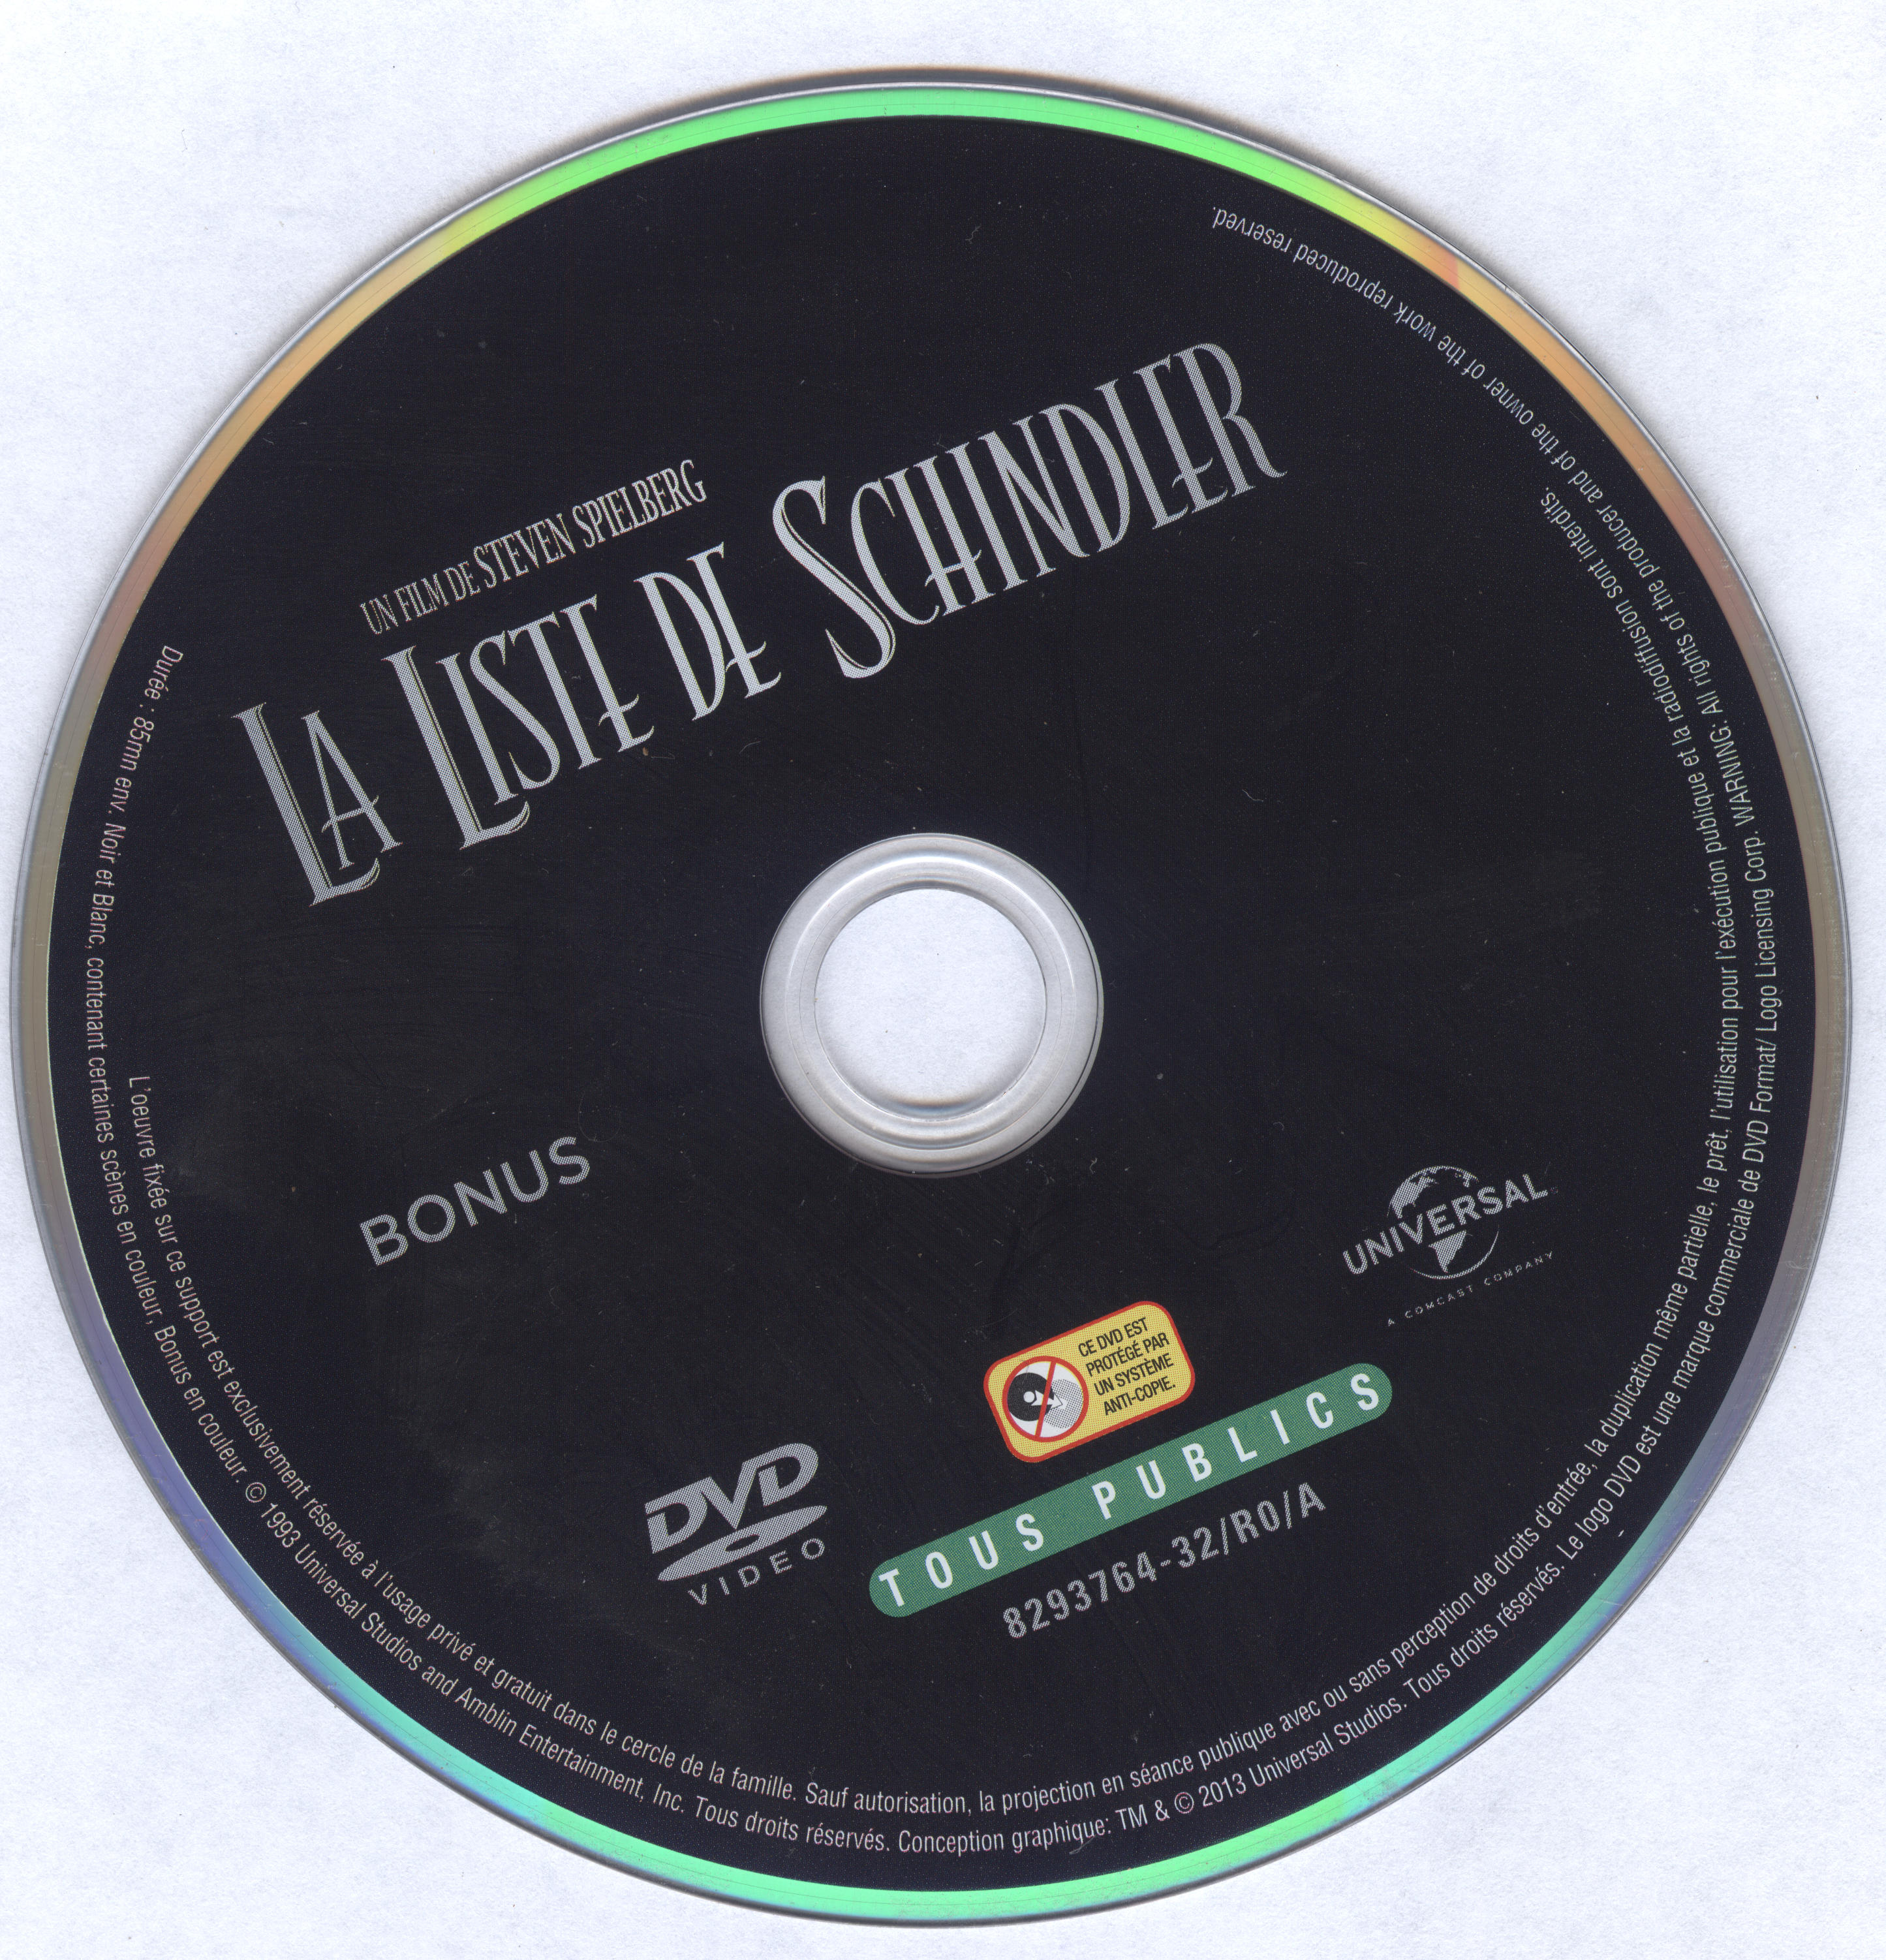 La liste de Schindler DISC 2 v2